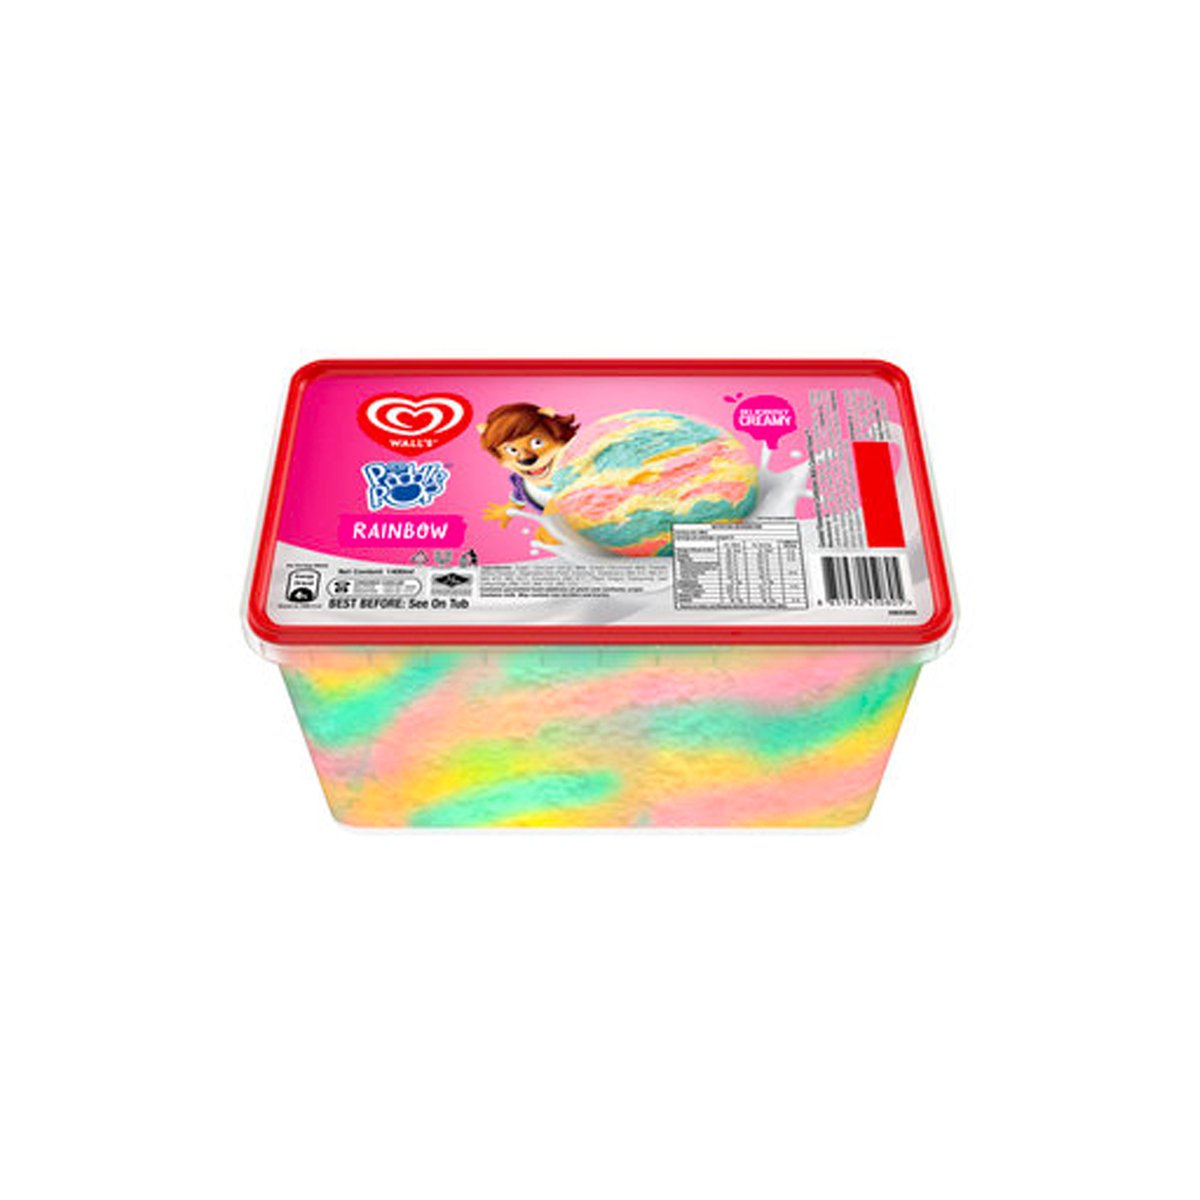 Walls Paddle Pop Rainbow Ice Cream 1.4Liter